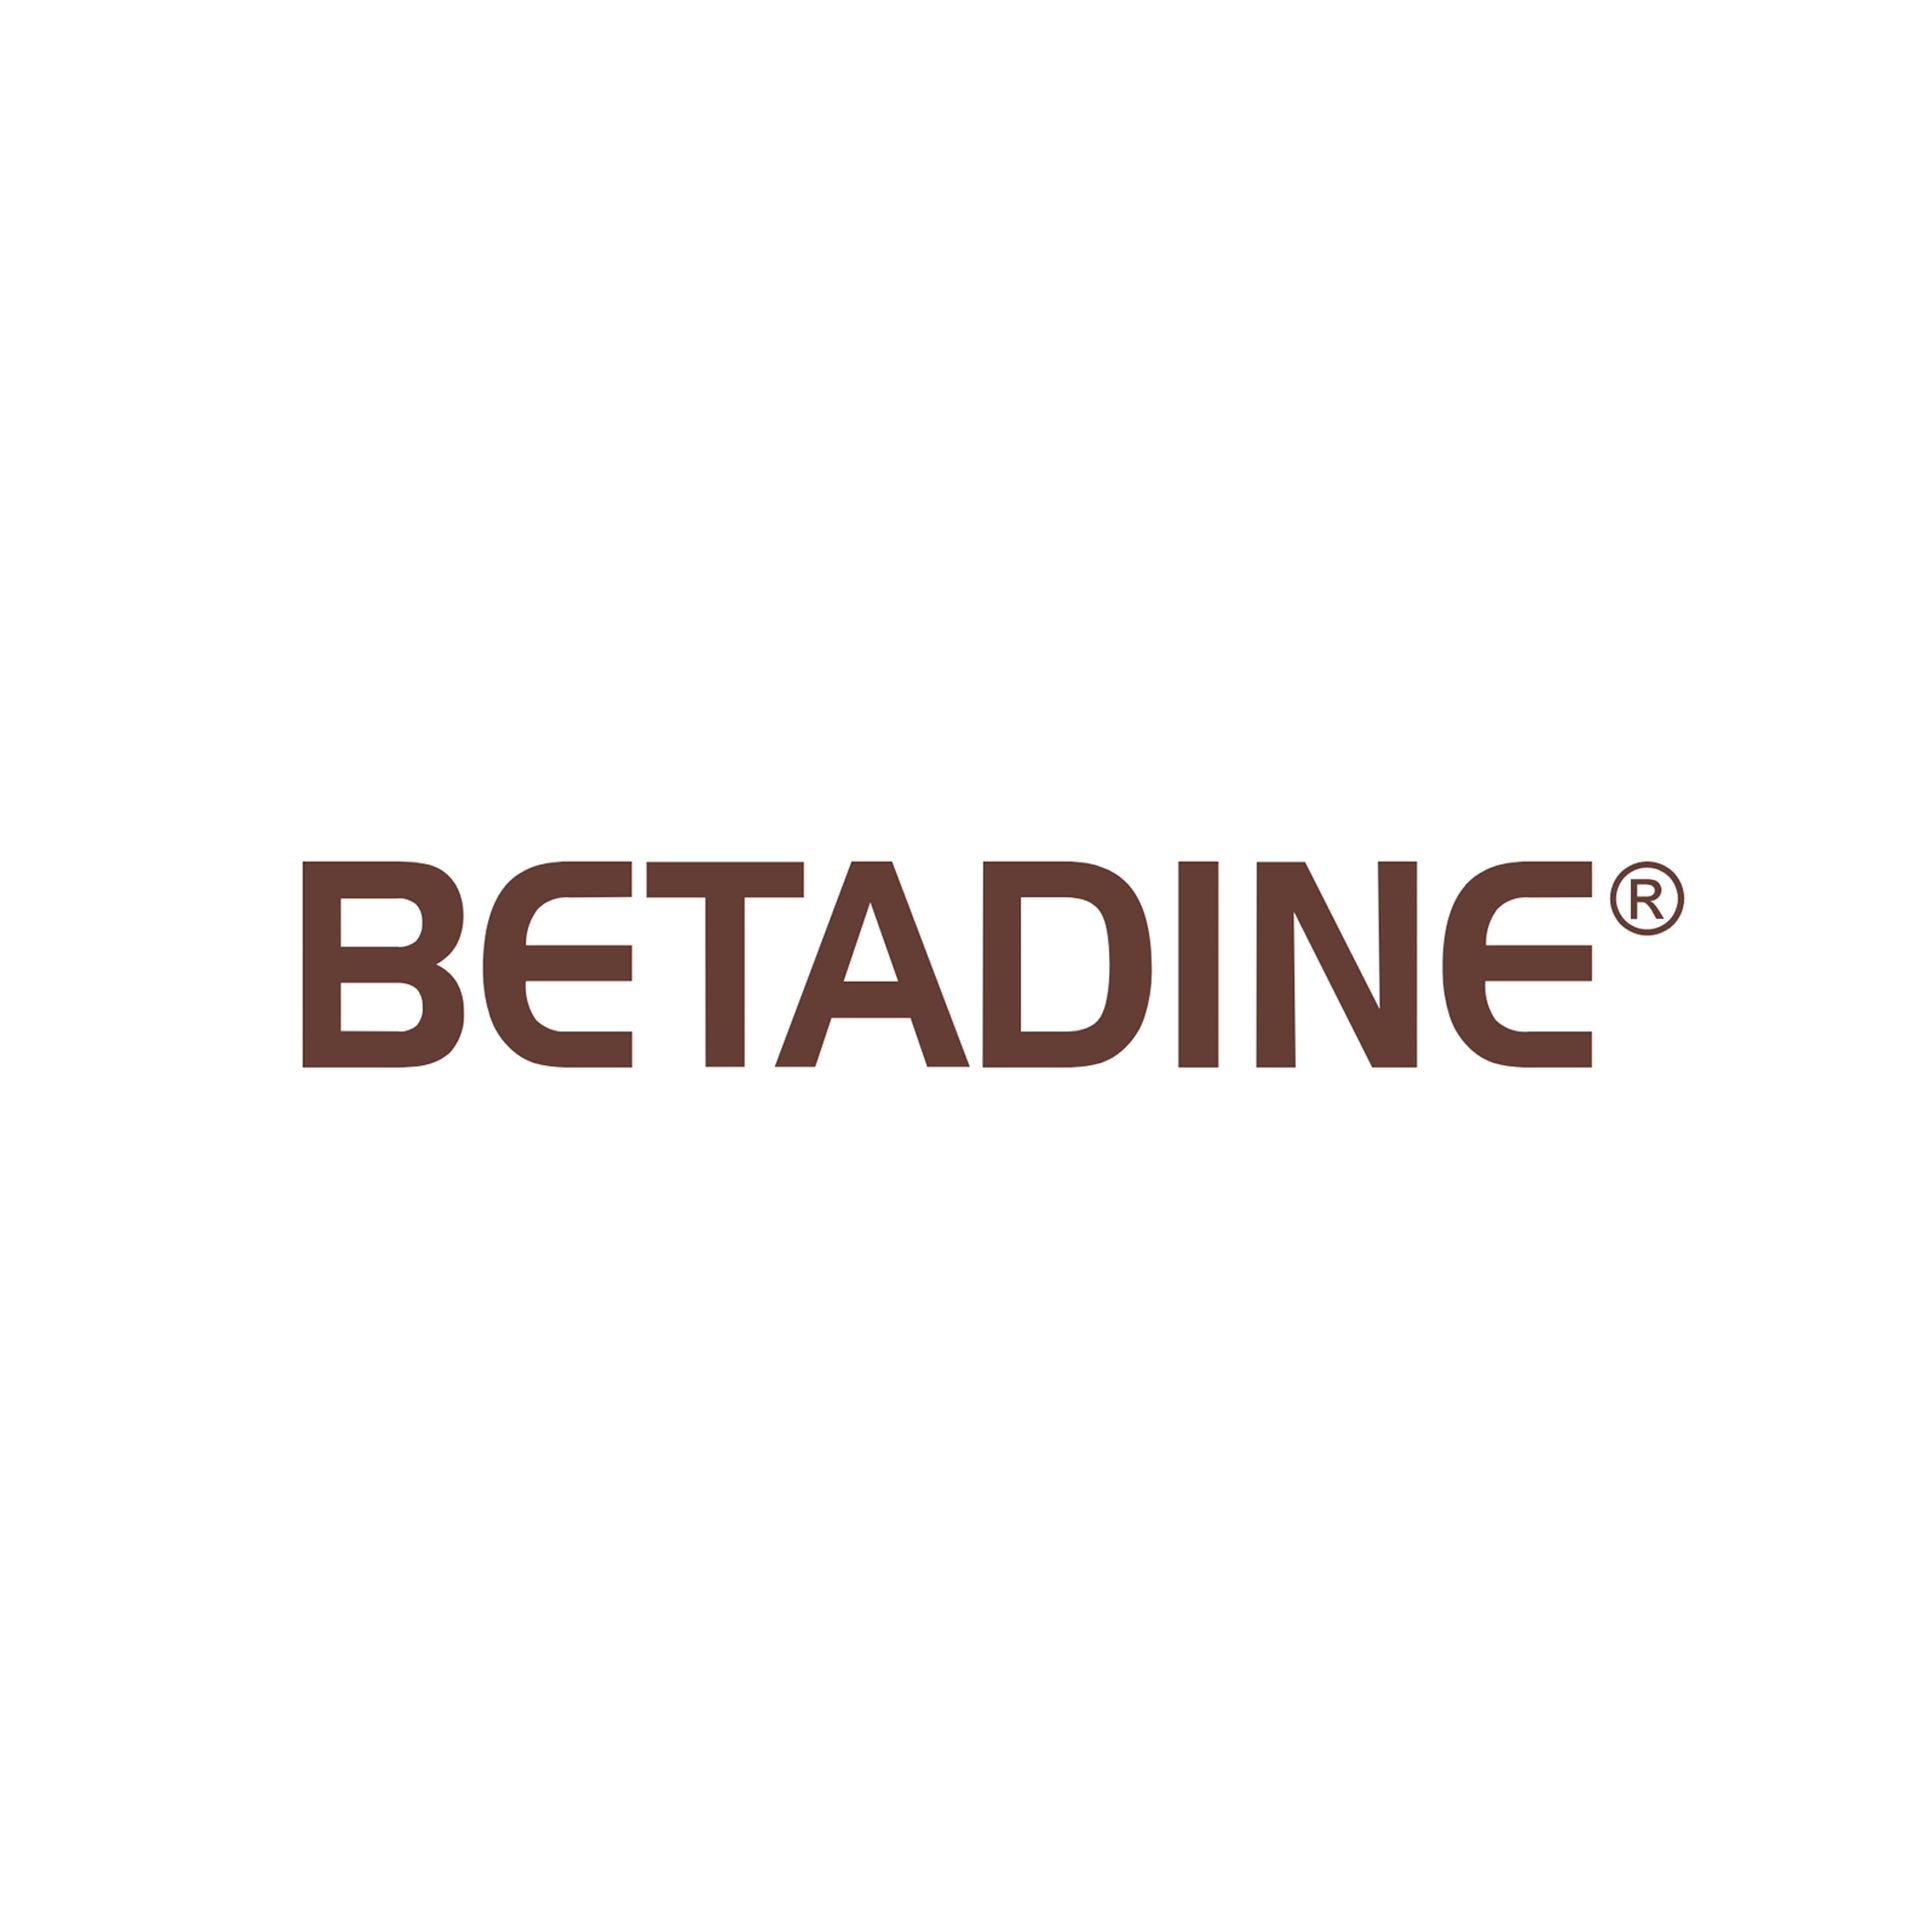 Product Brand: Betadine